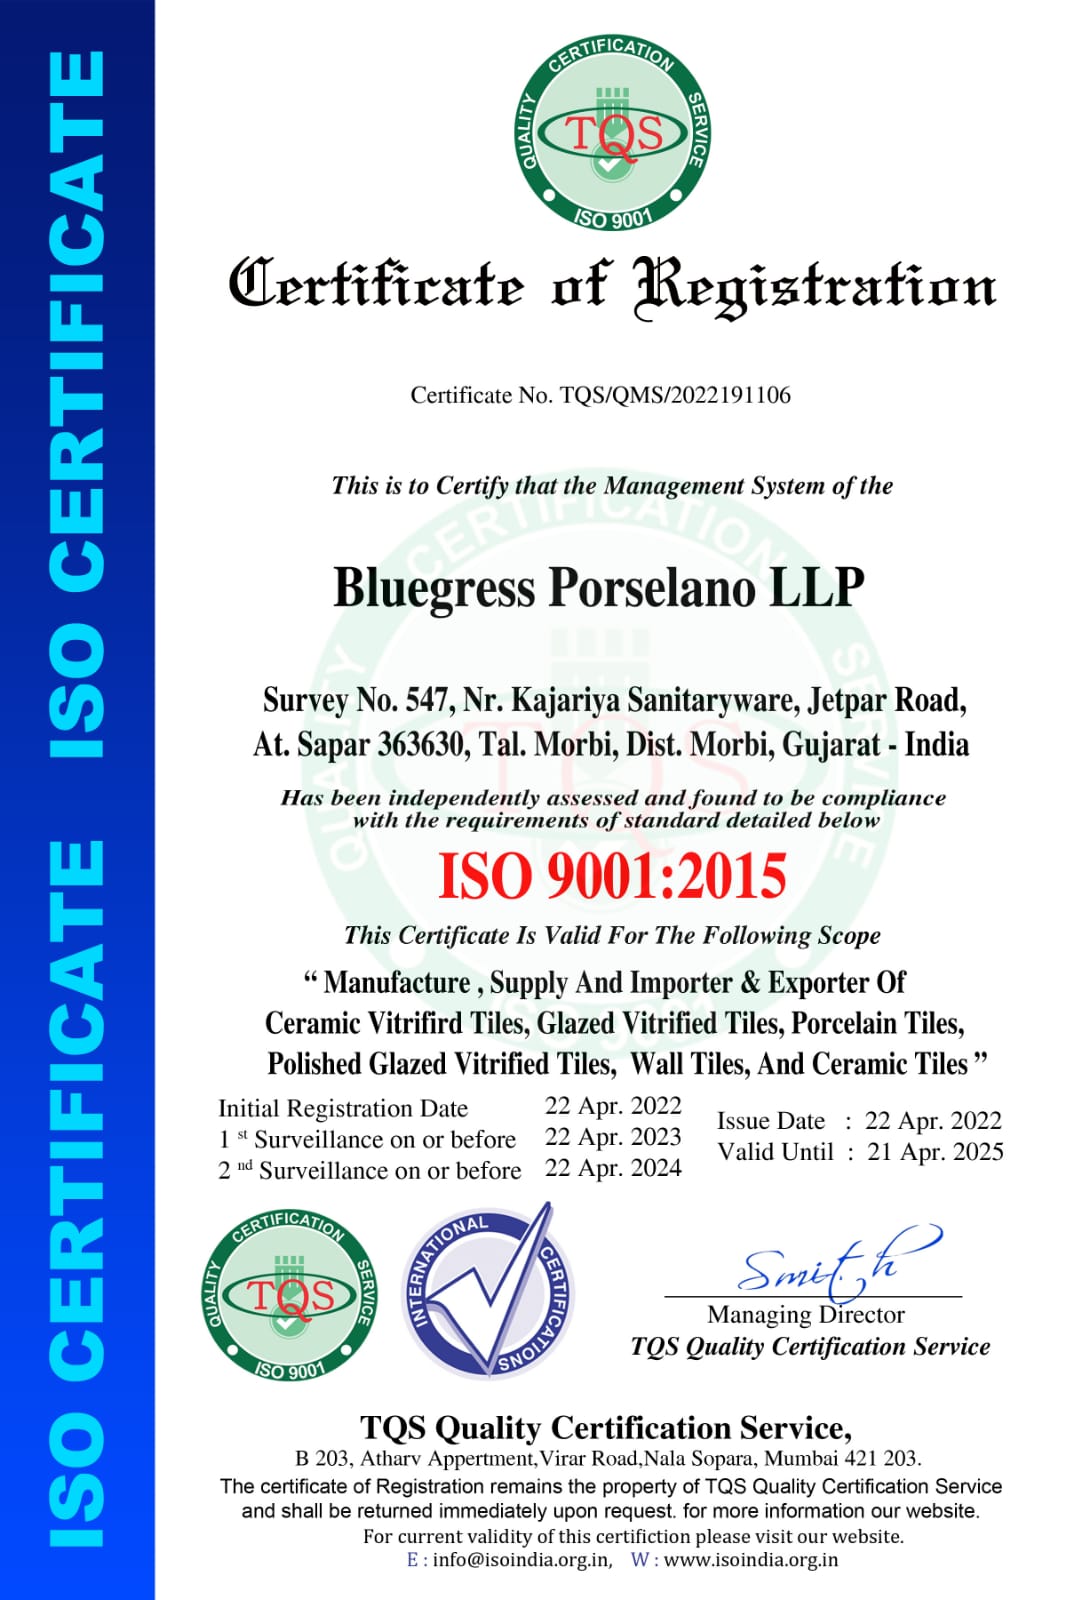 Bluegress Porcelano LLP ISO 9001 : 2015